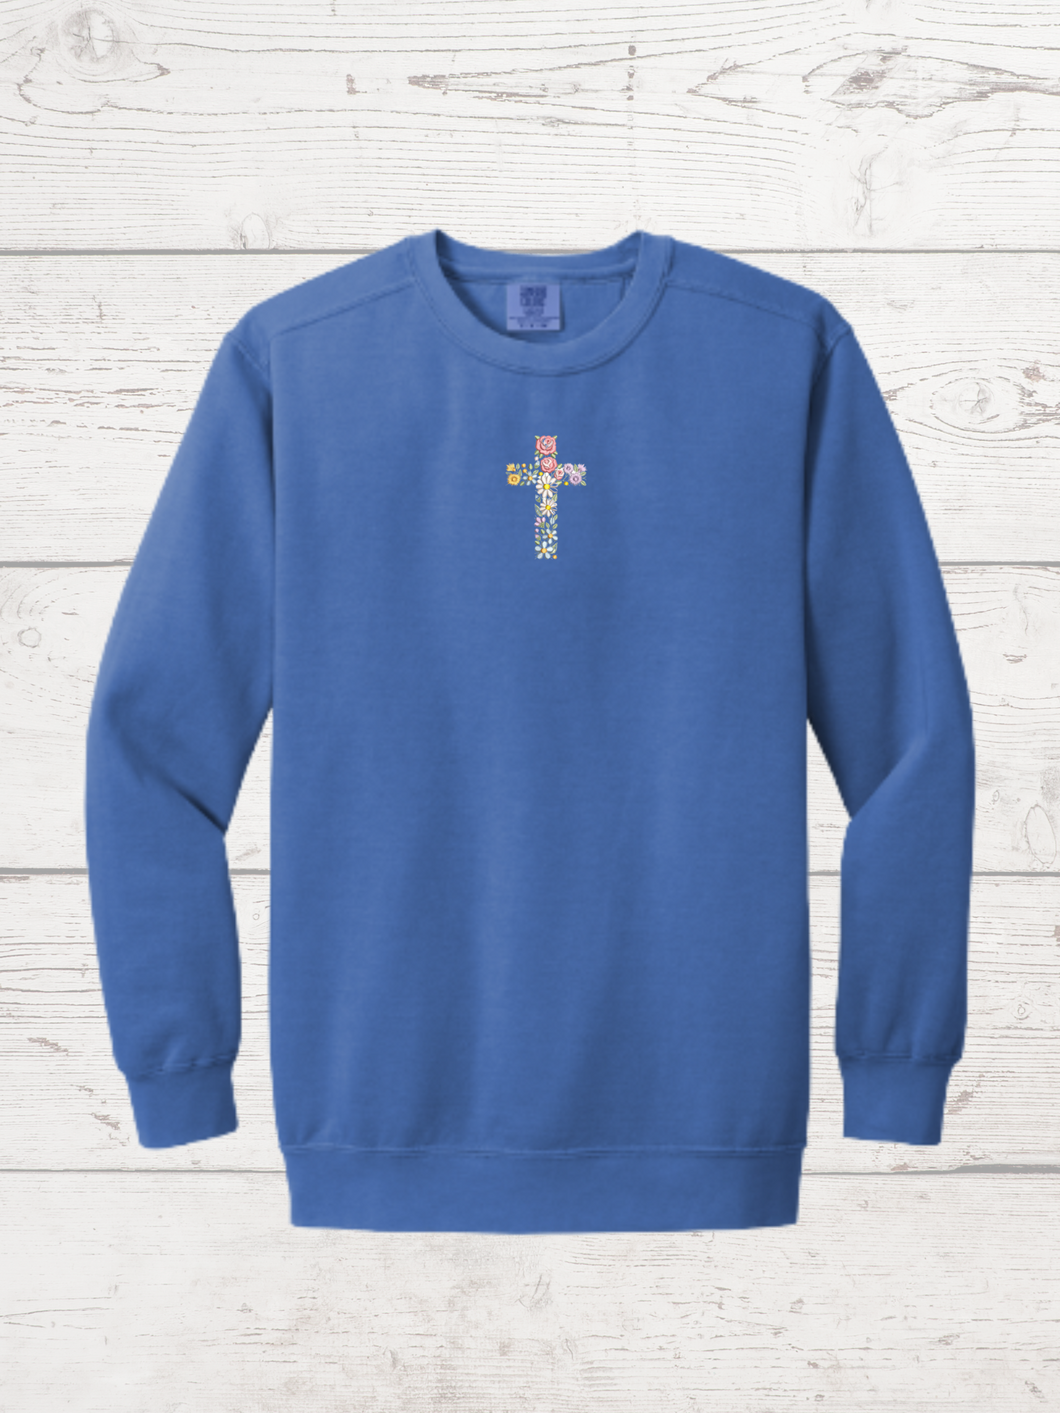 Embroidered Cross Sweatshirt-Unisex Adult, Comfort Colors, Flo Blue